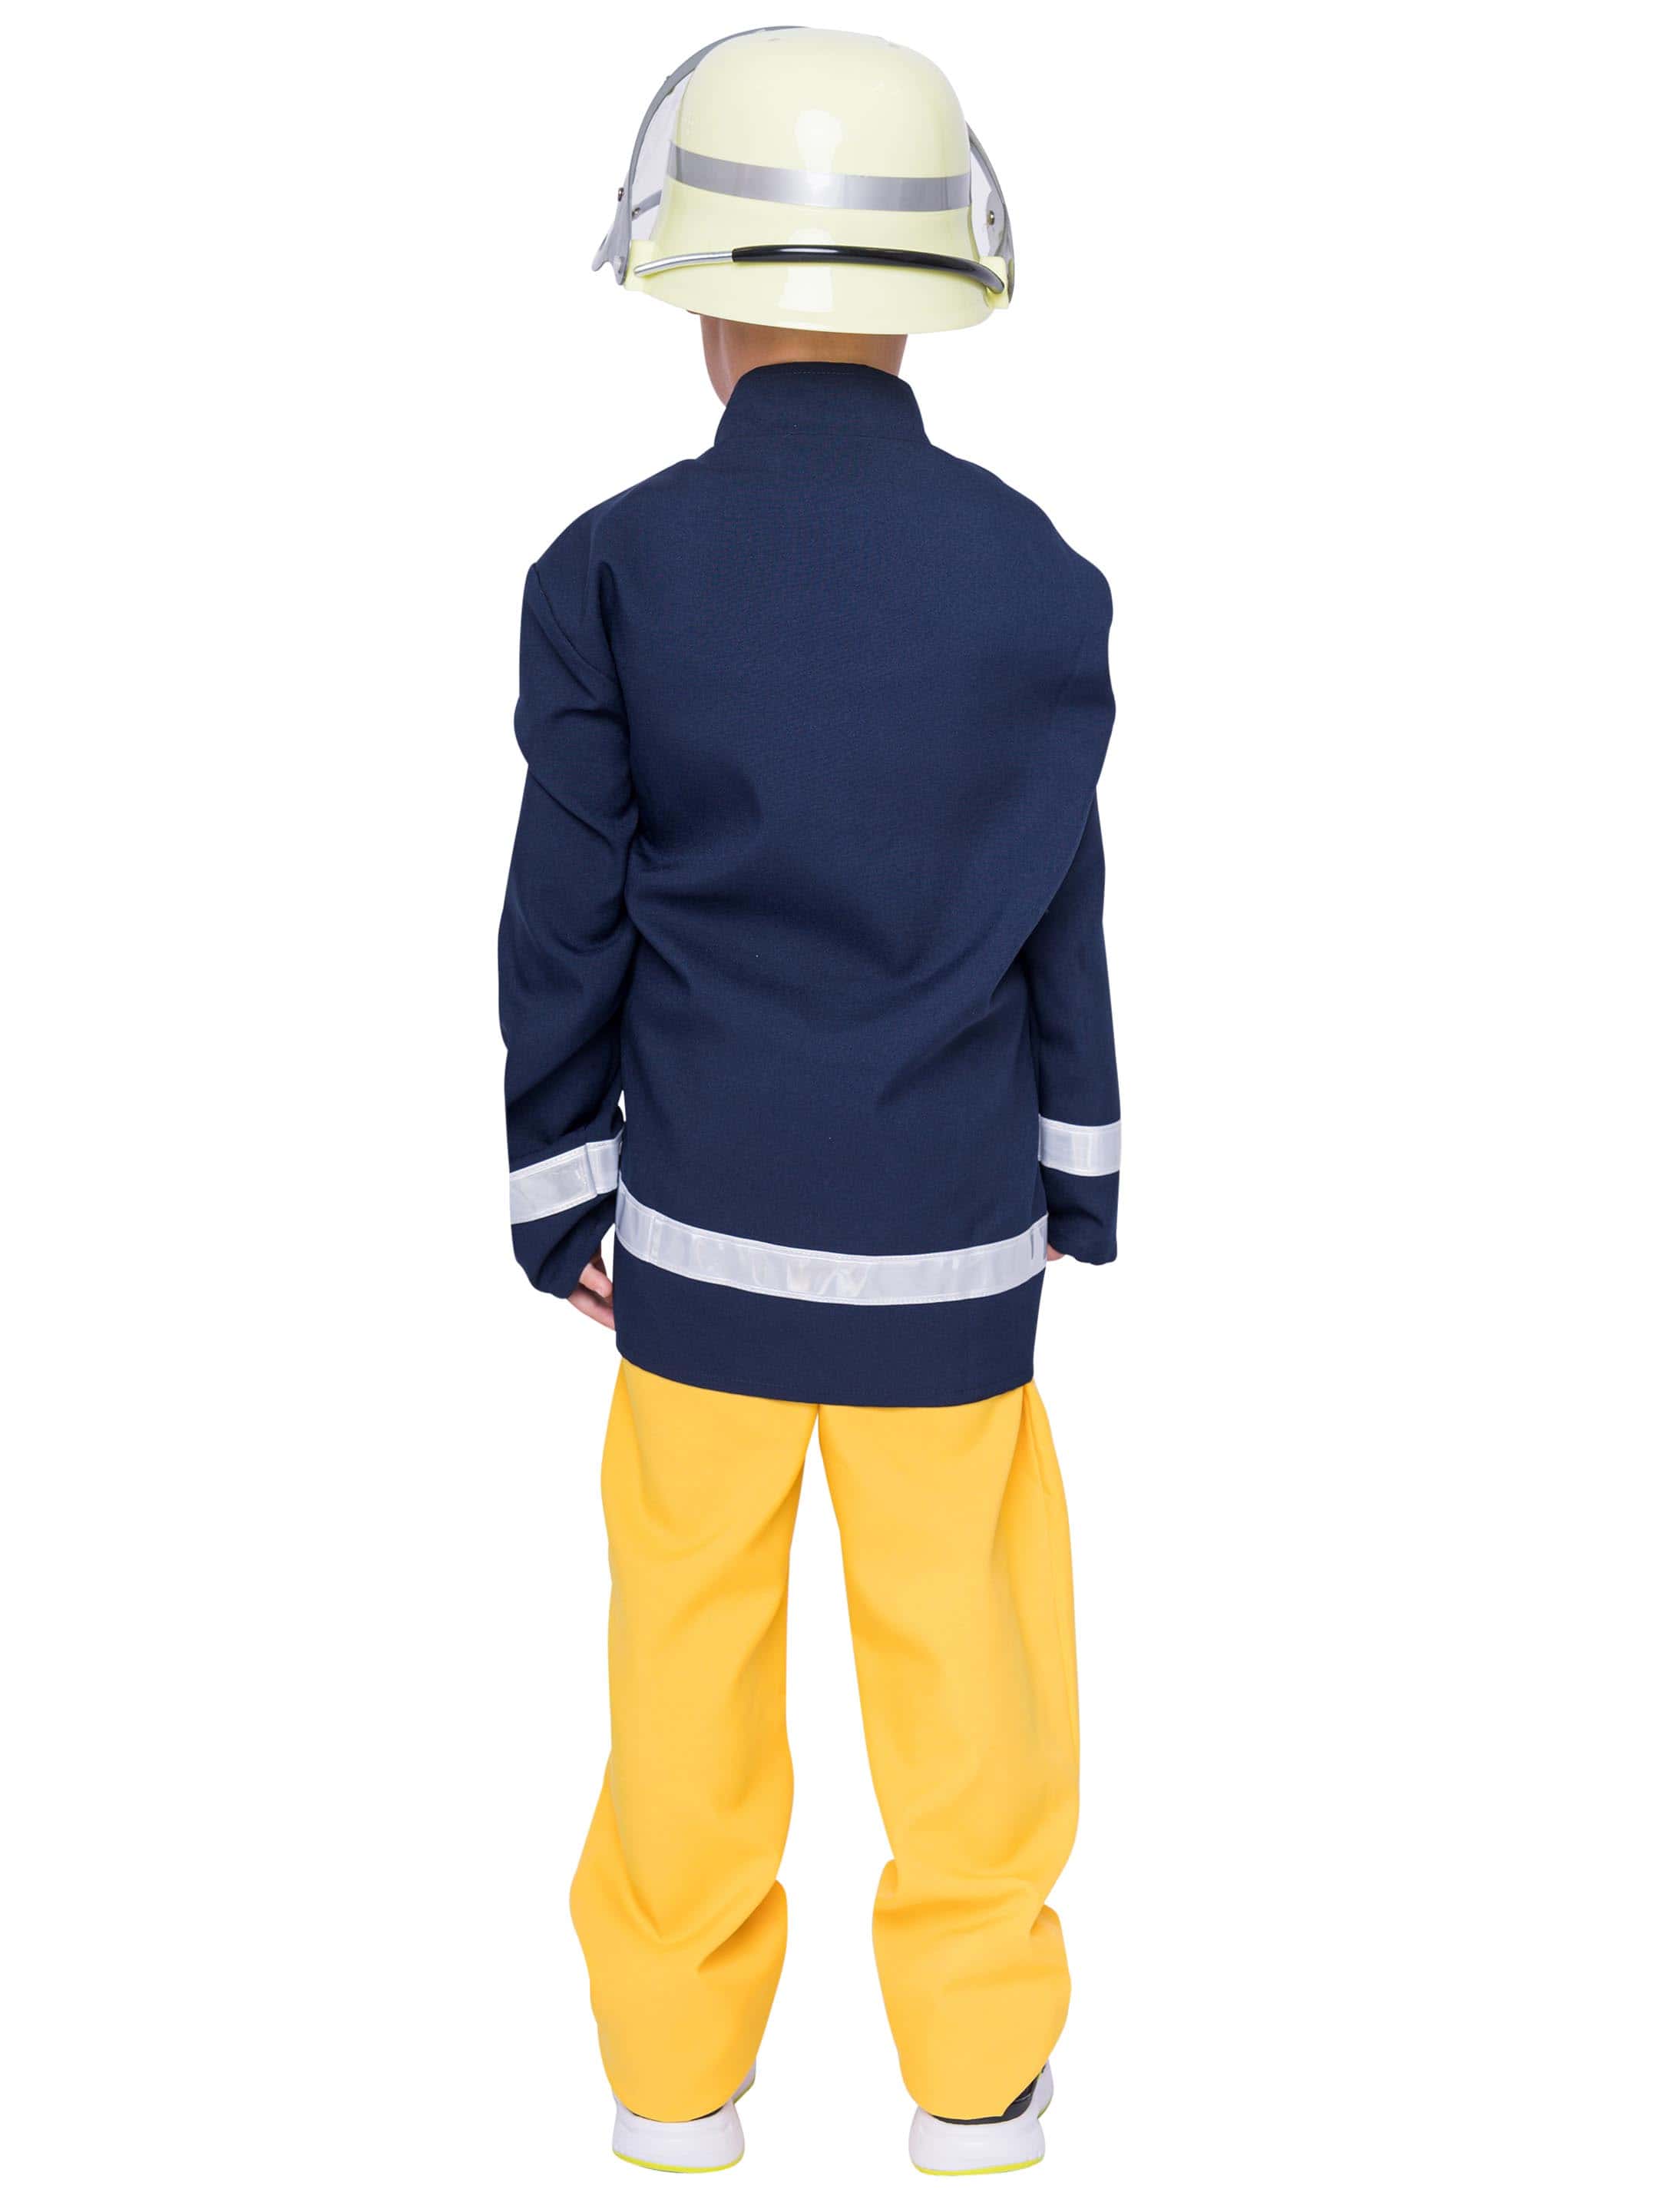 Feuerwehrmann Kinder 2-tlg. Unisex blau/gelb 104